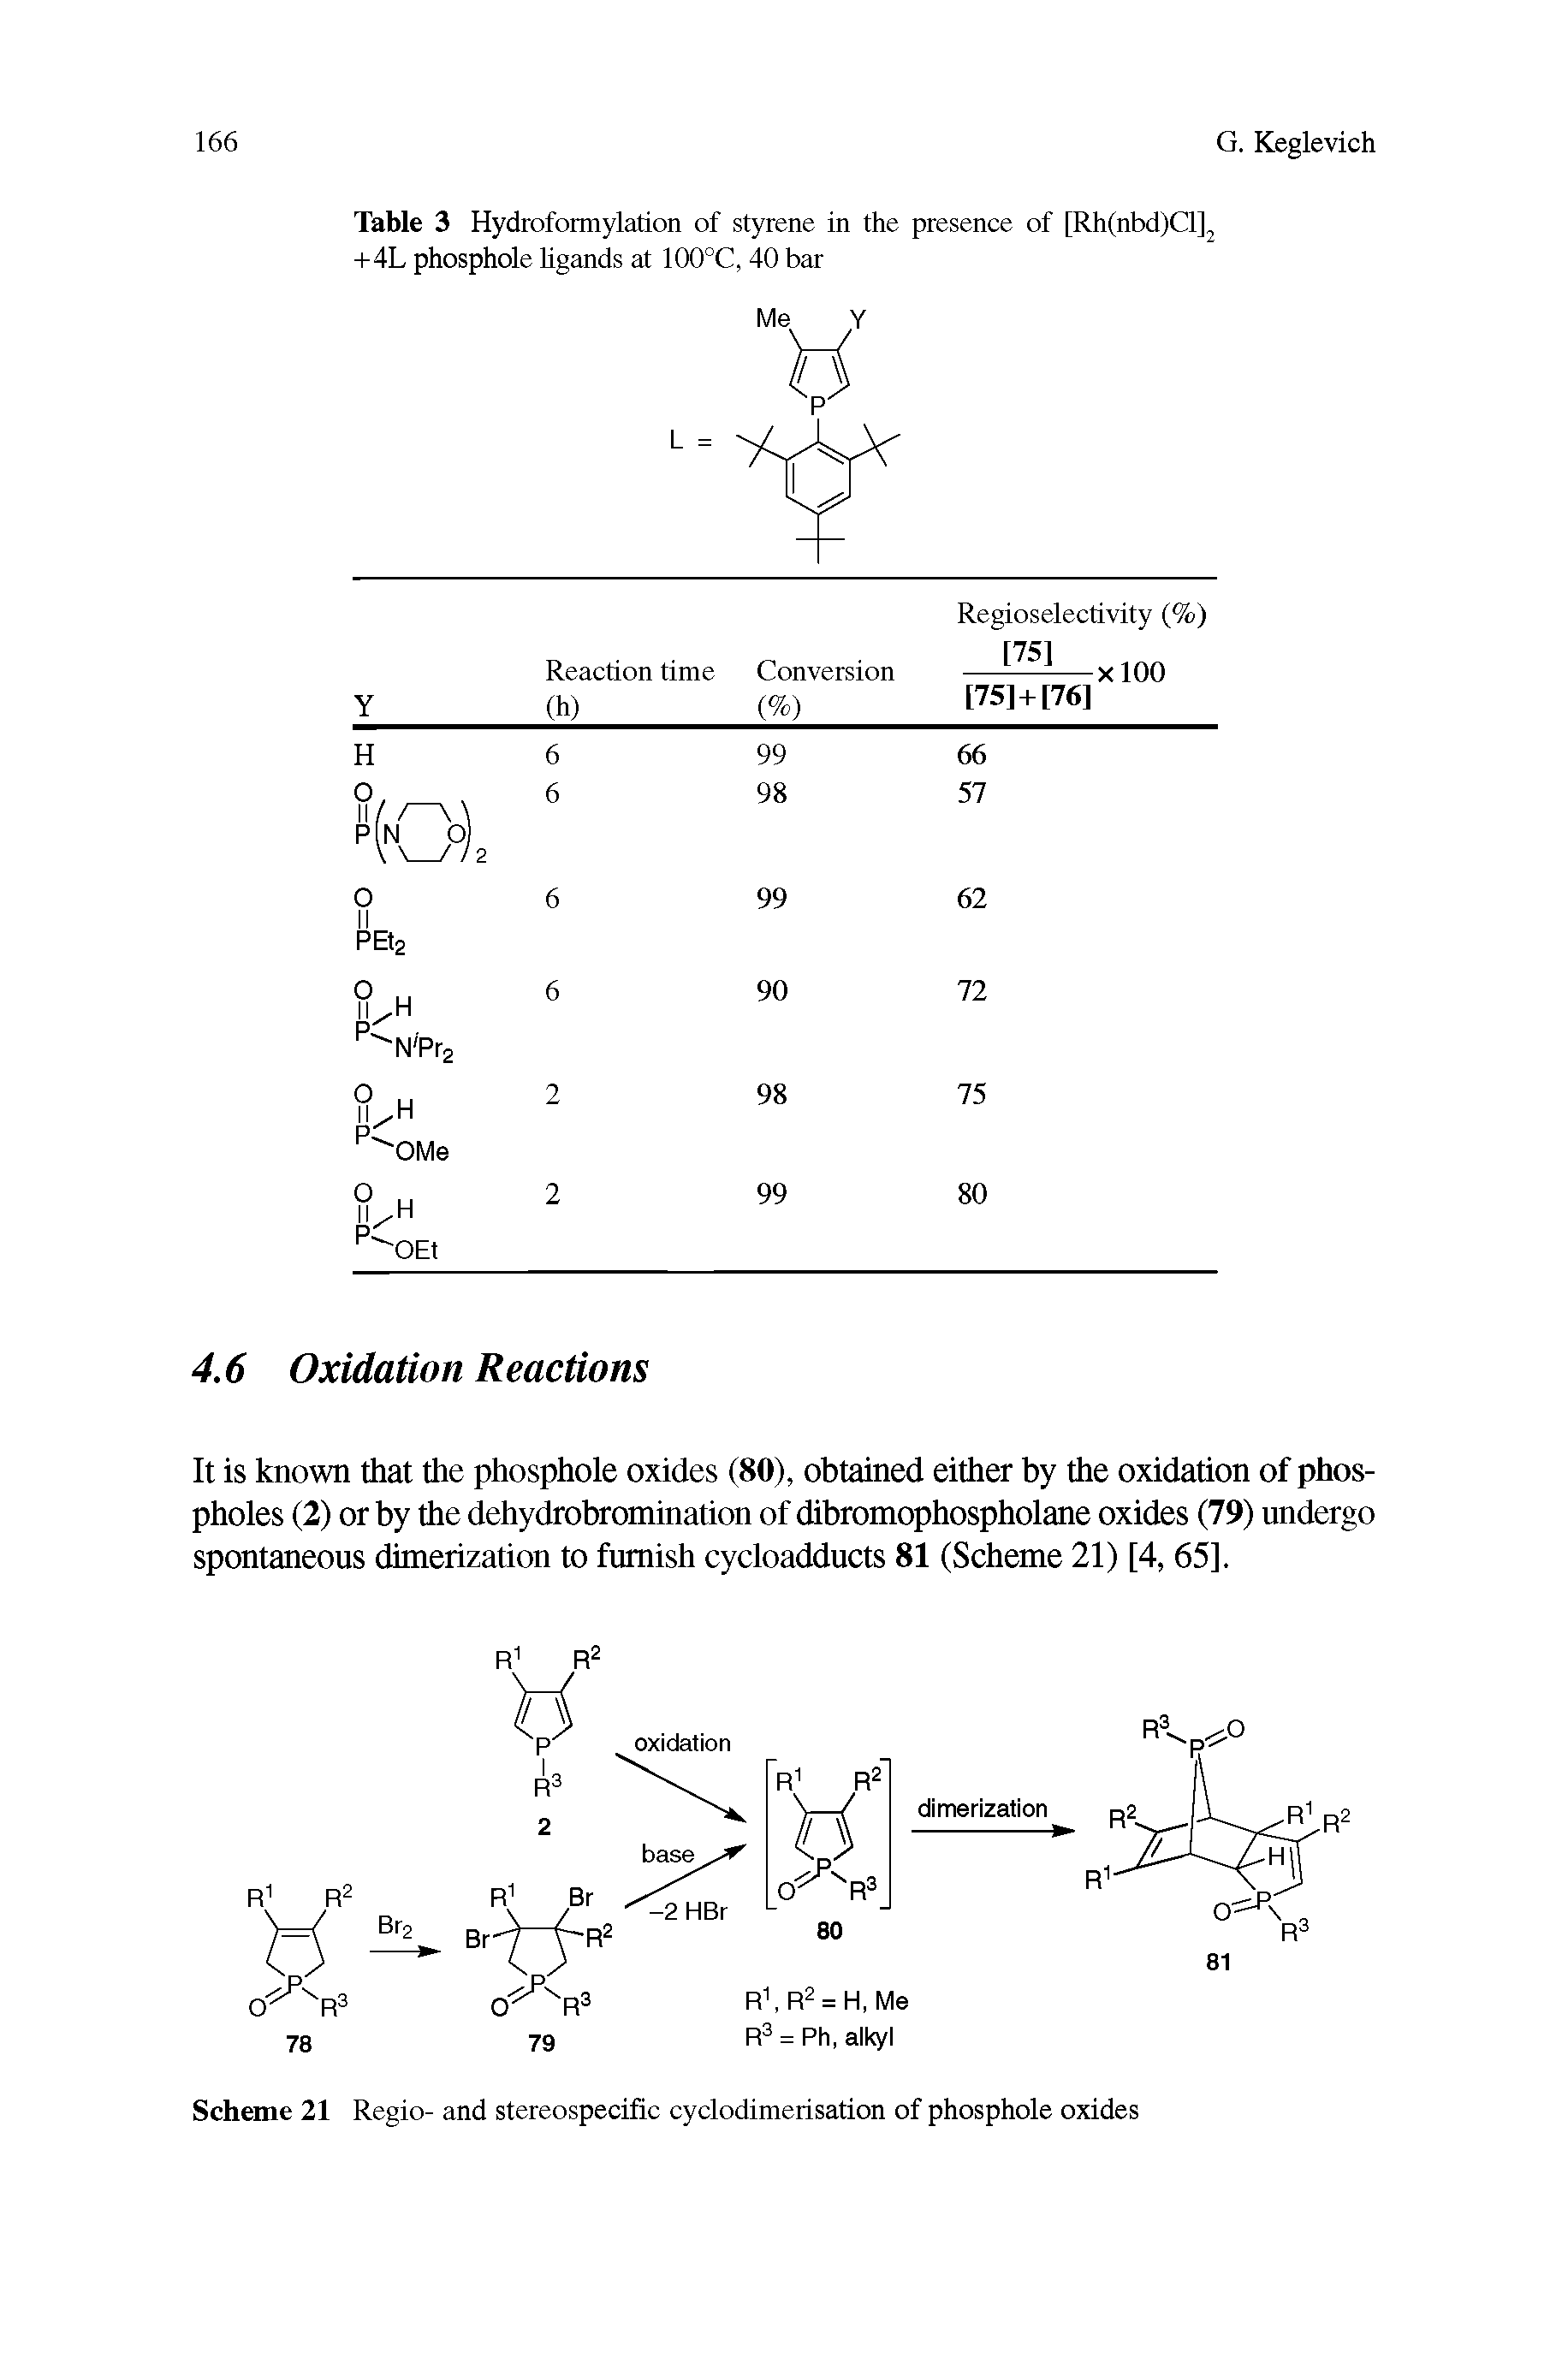 Table 3 Hydroformylation of styrene in the presence of [Rh(nbd)Cl]2 +4L phosphole ligands at 100°C, 40 bar...